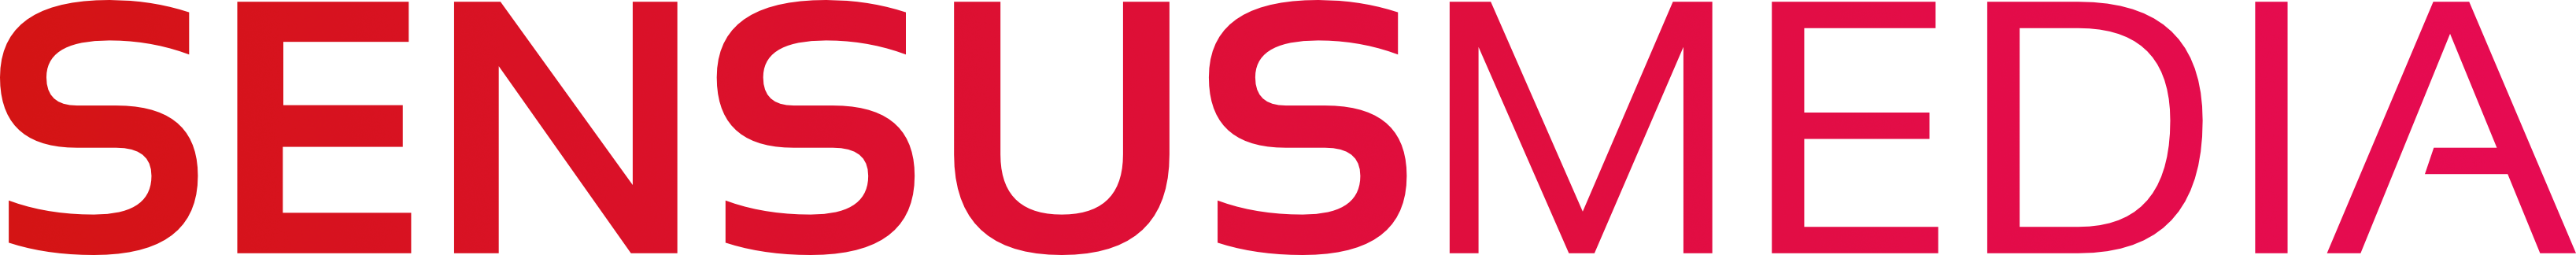 SENSUS MEDIA Logo